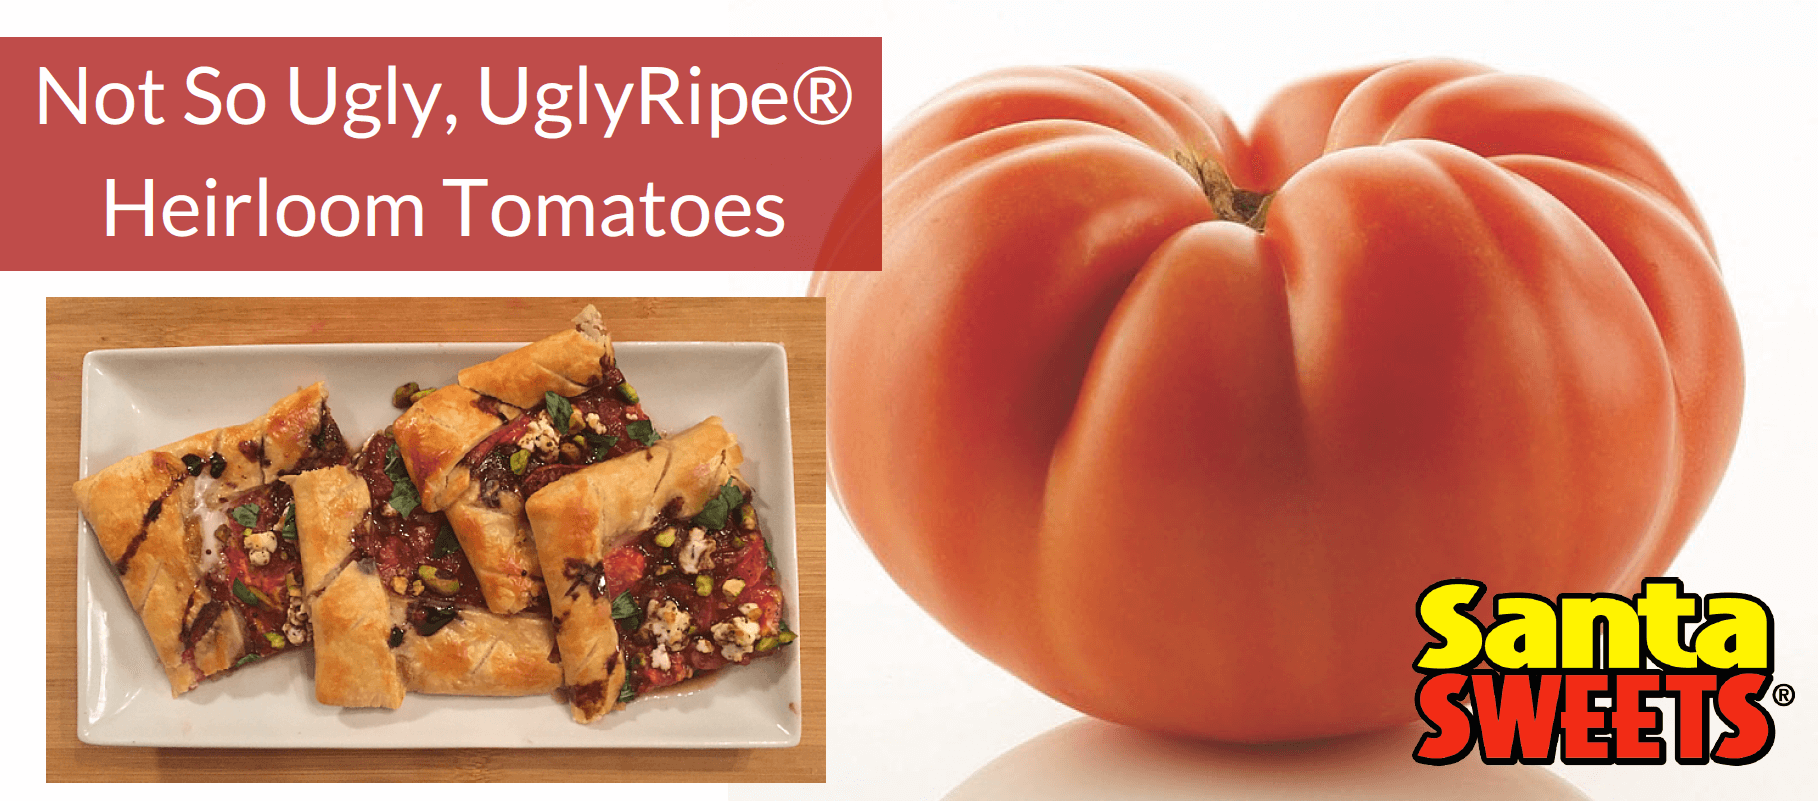 Not So Ugly, UglyRipe® Heirloom Tomatoes